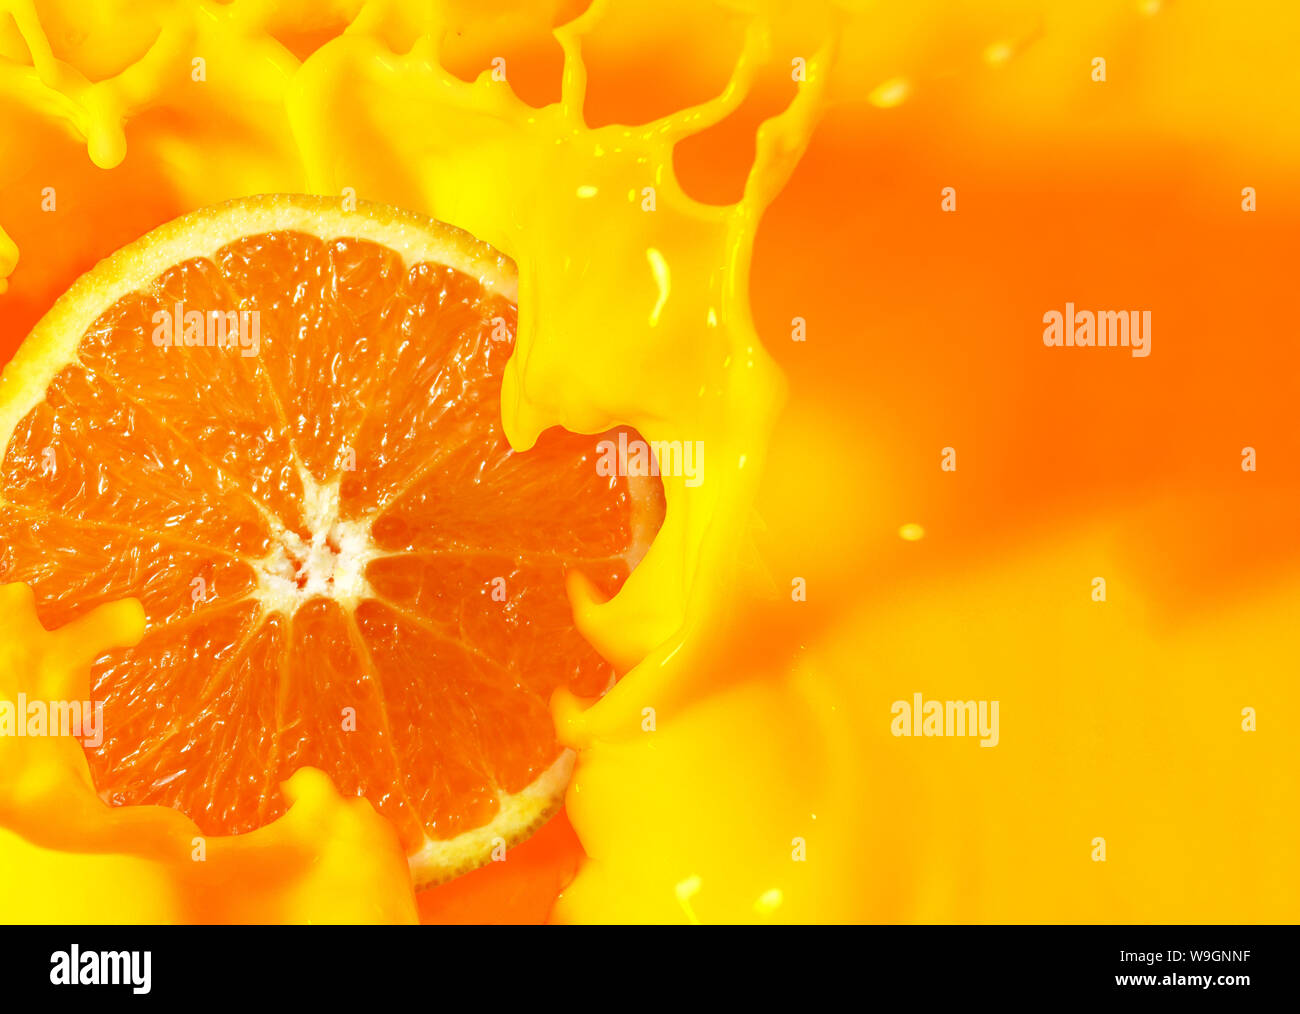 Orange Fruit Cut In Half With Juice Splash Background Stock